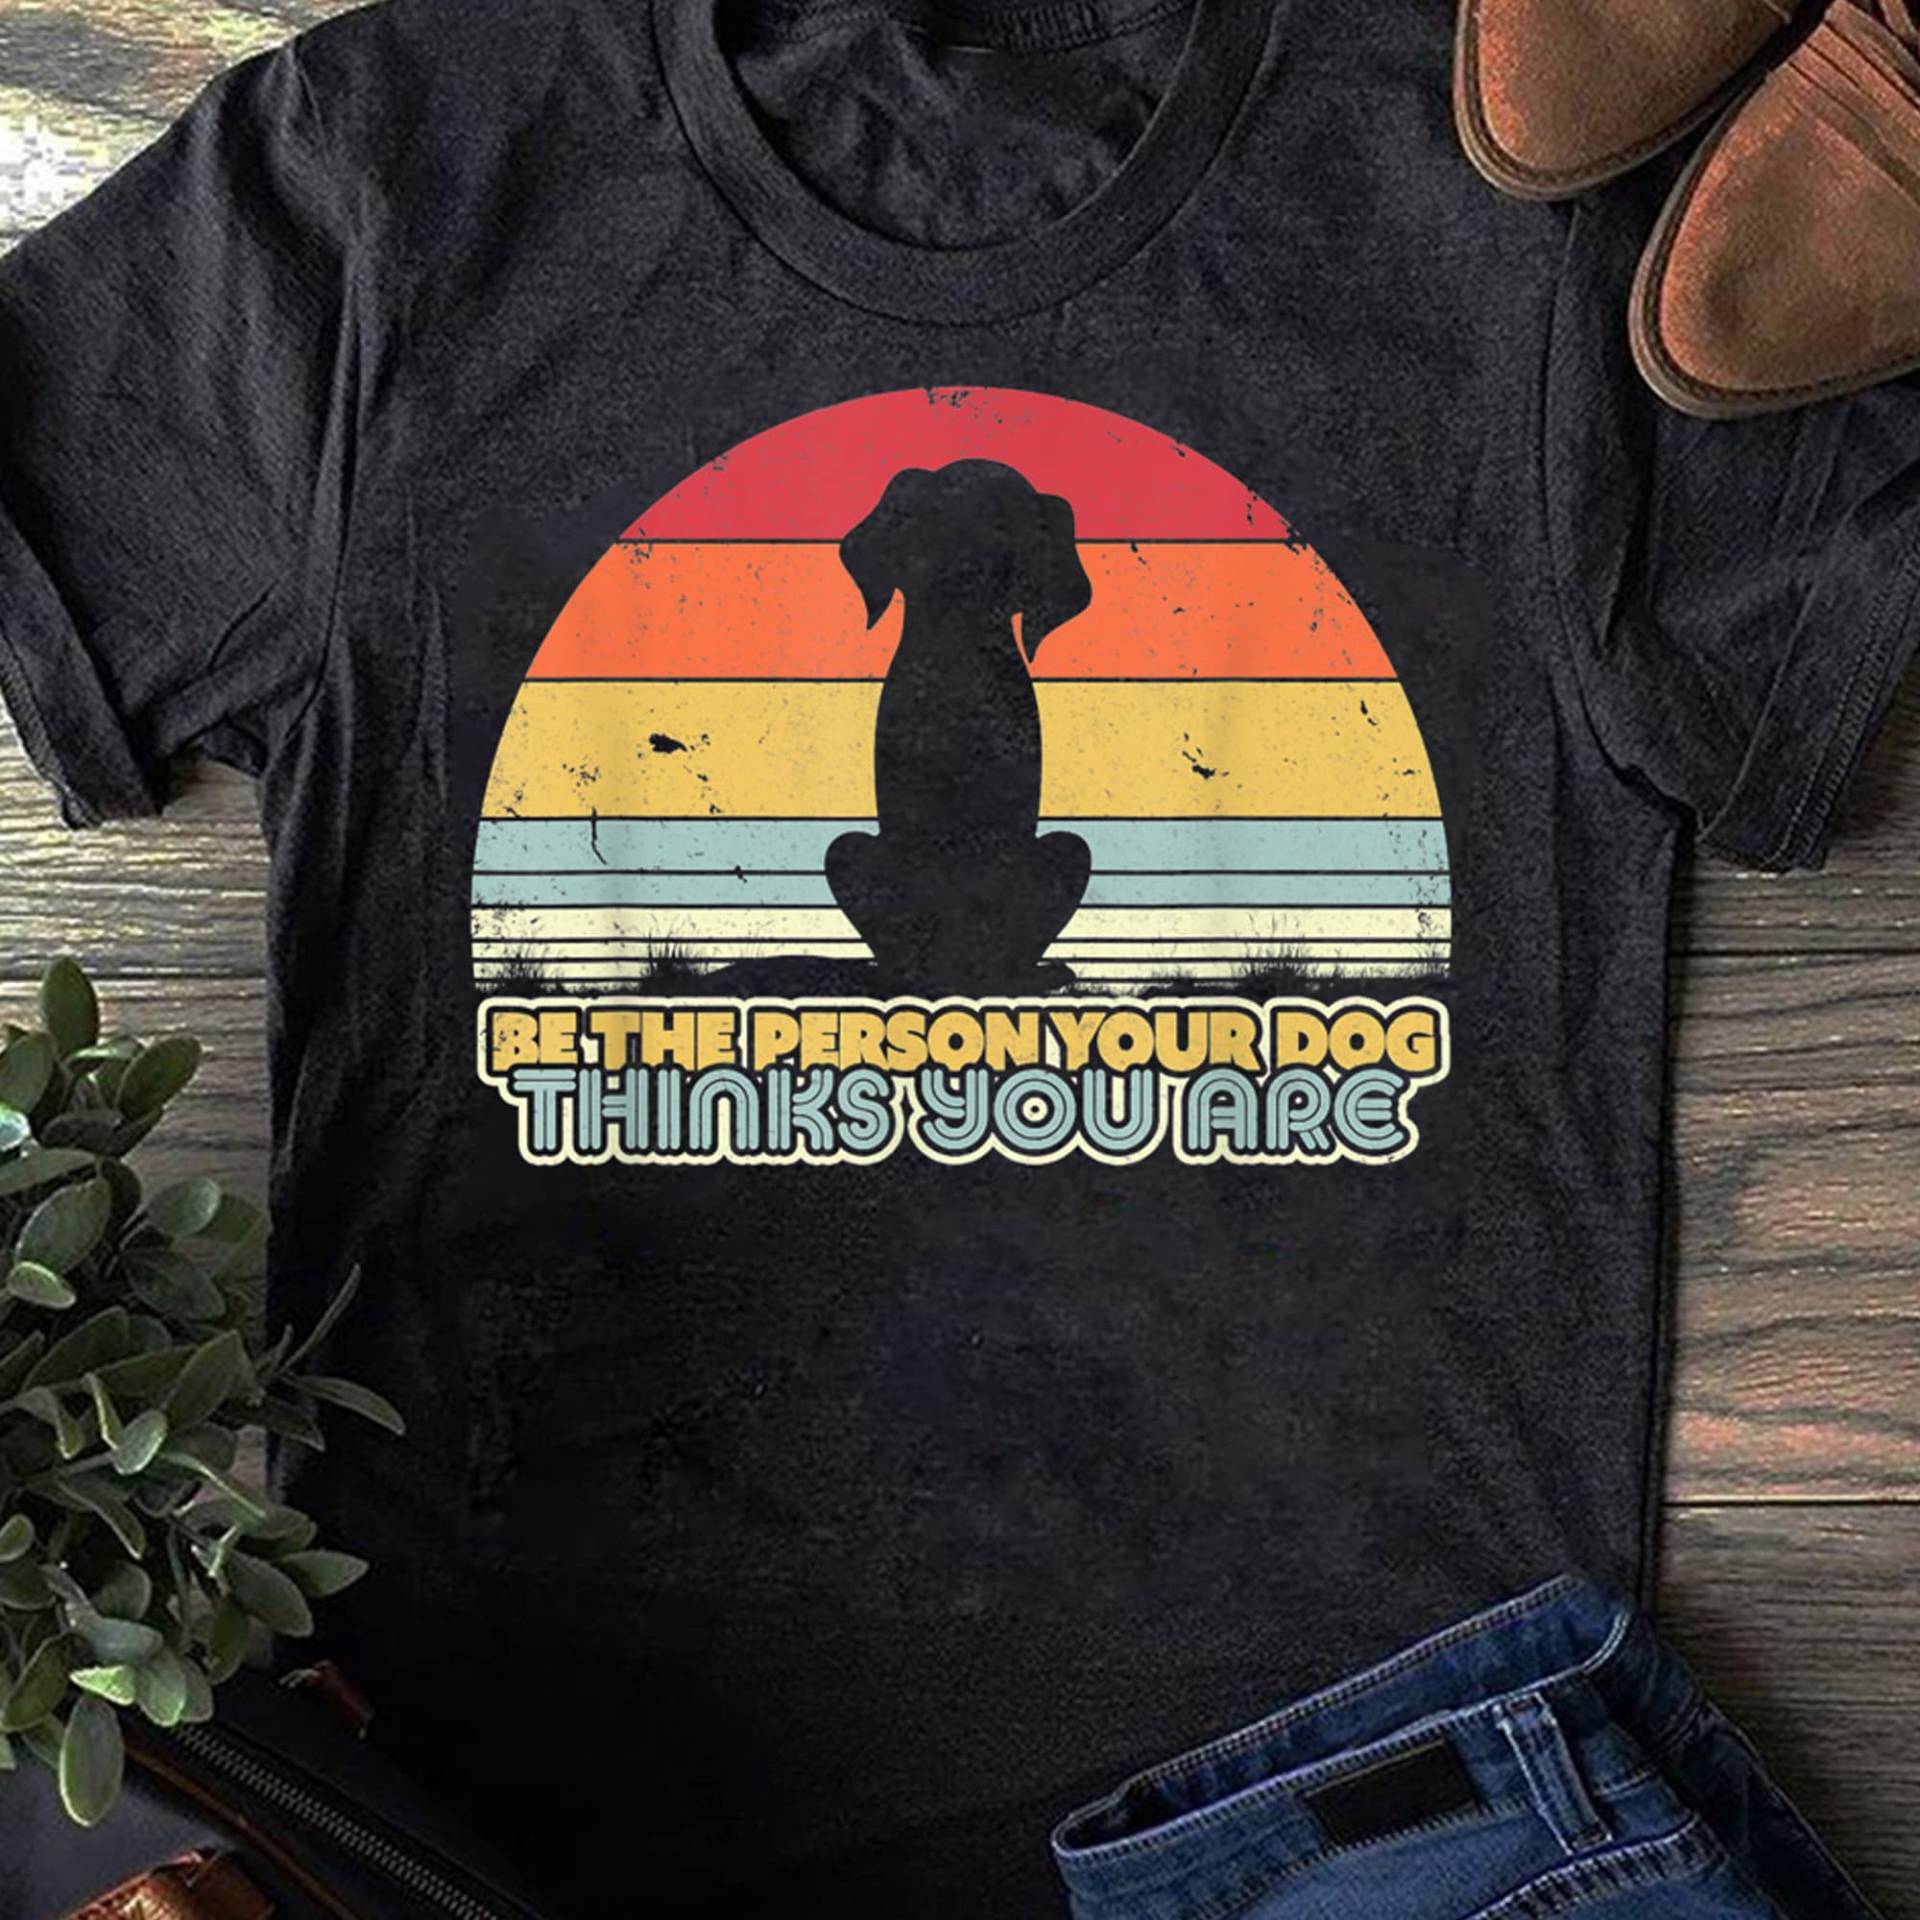 Be The Person Your Dog Thinks You Are Shirt Retro Style T-Shirt - Geschenk Für Hundeliebhaber Lustiges Hundeshirt von LeonaTee